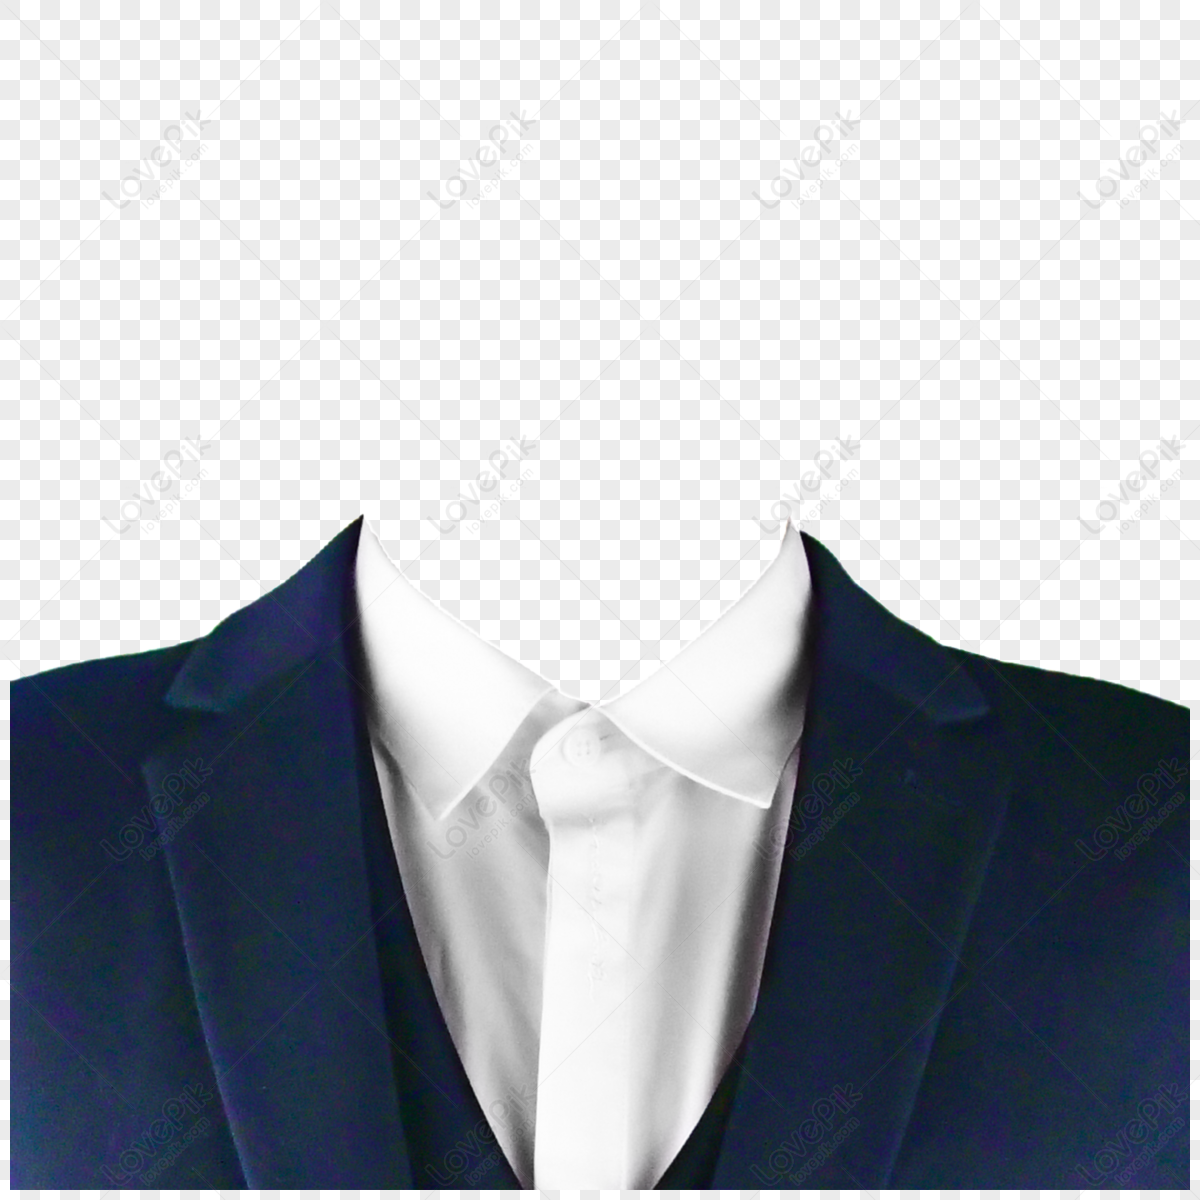 Men Suit PNG Image - PurePNG | Free transparent CC0 PNG Image Library